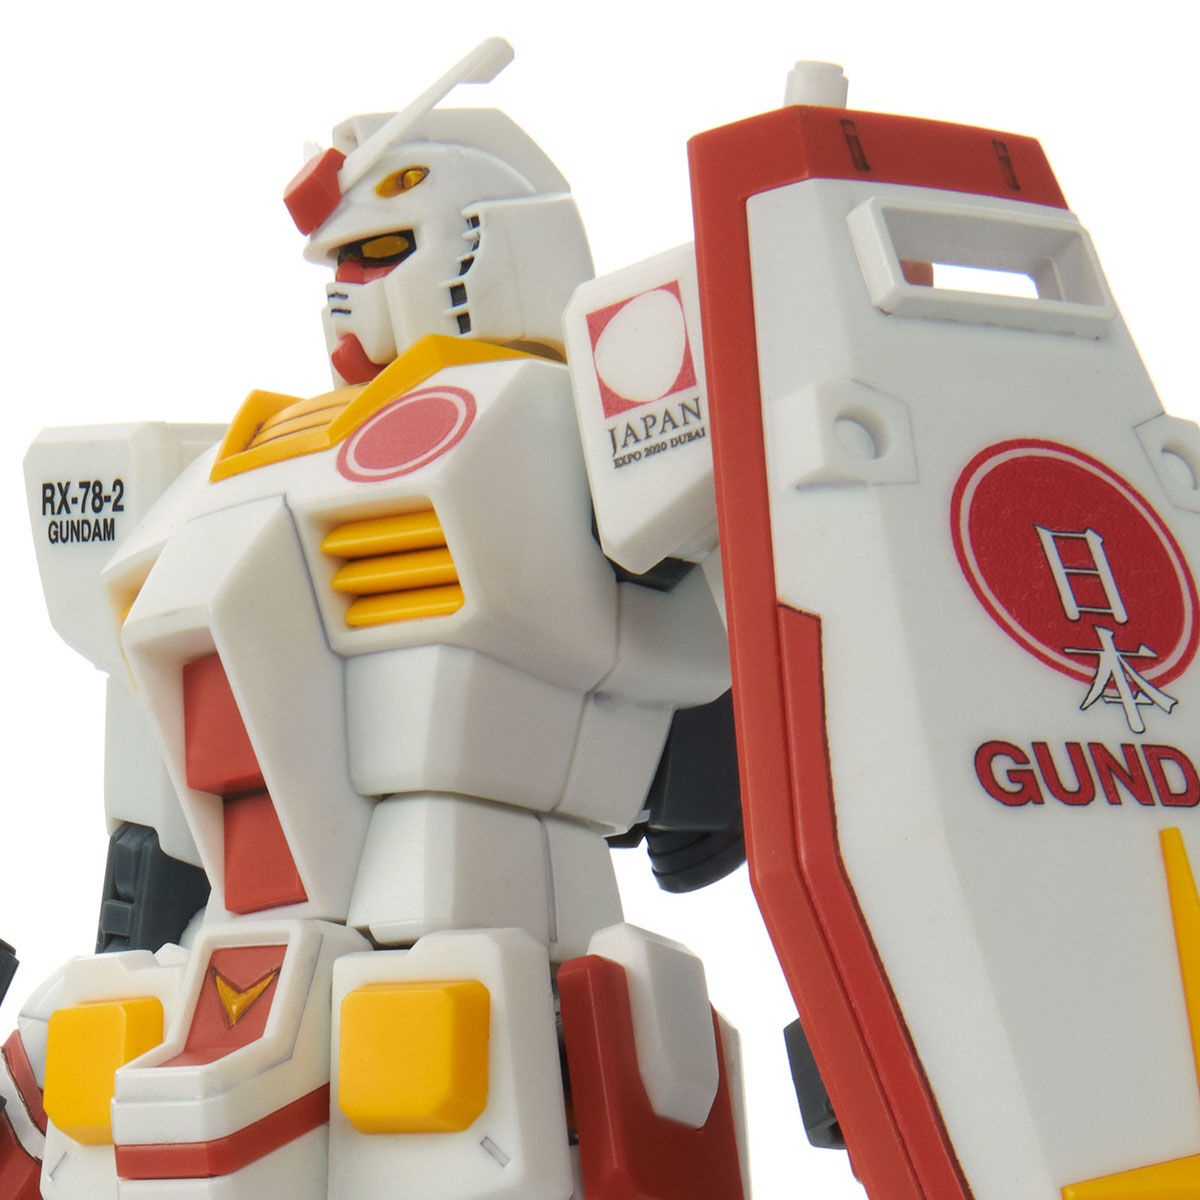 HGUC 1/144 RX-78-2 Gundam(PR Ambassador of the Japan Pavilion, Expo 2020 Dubai)